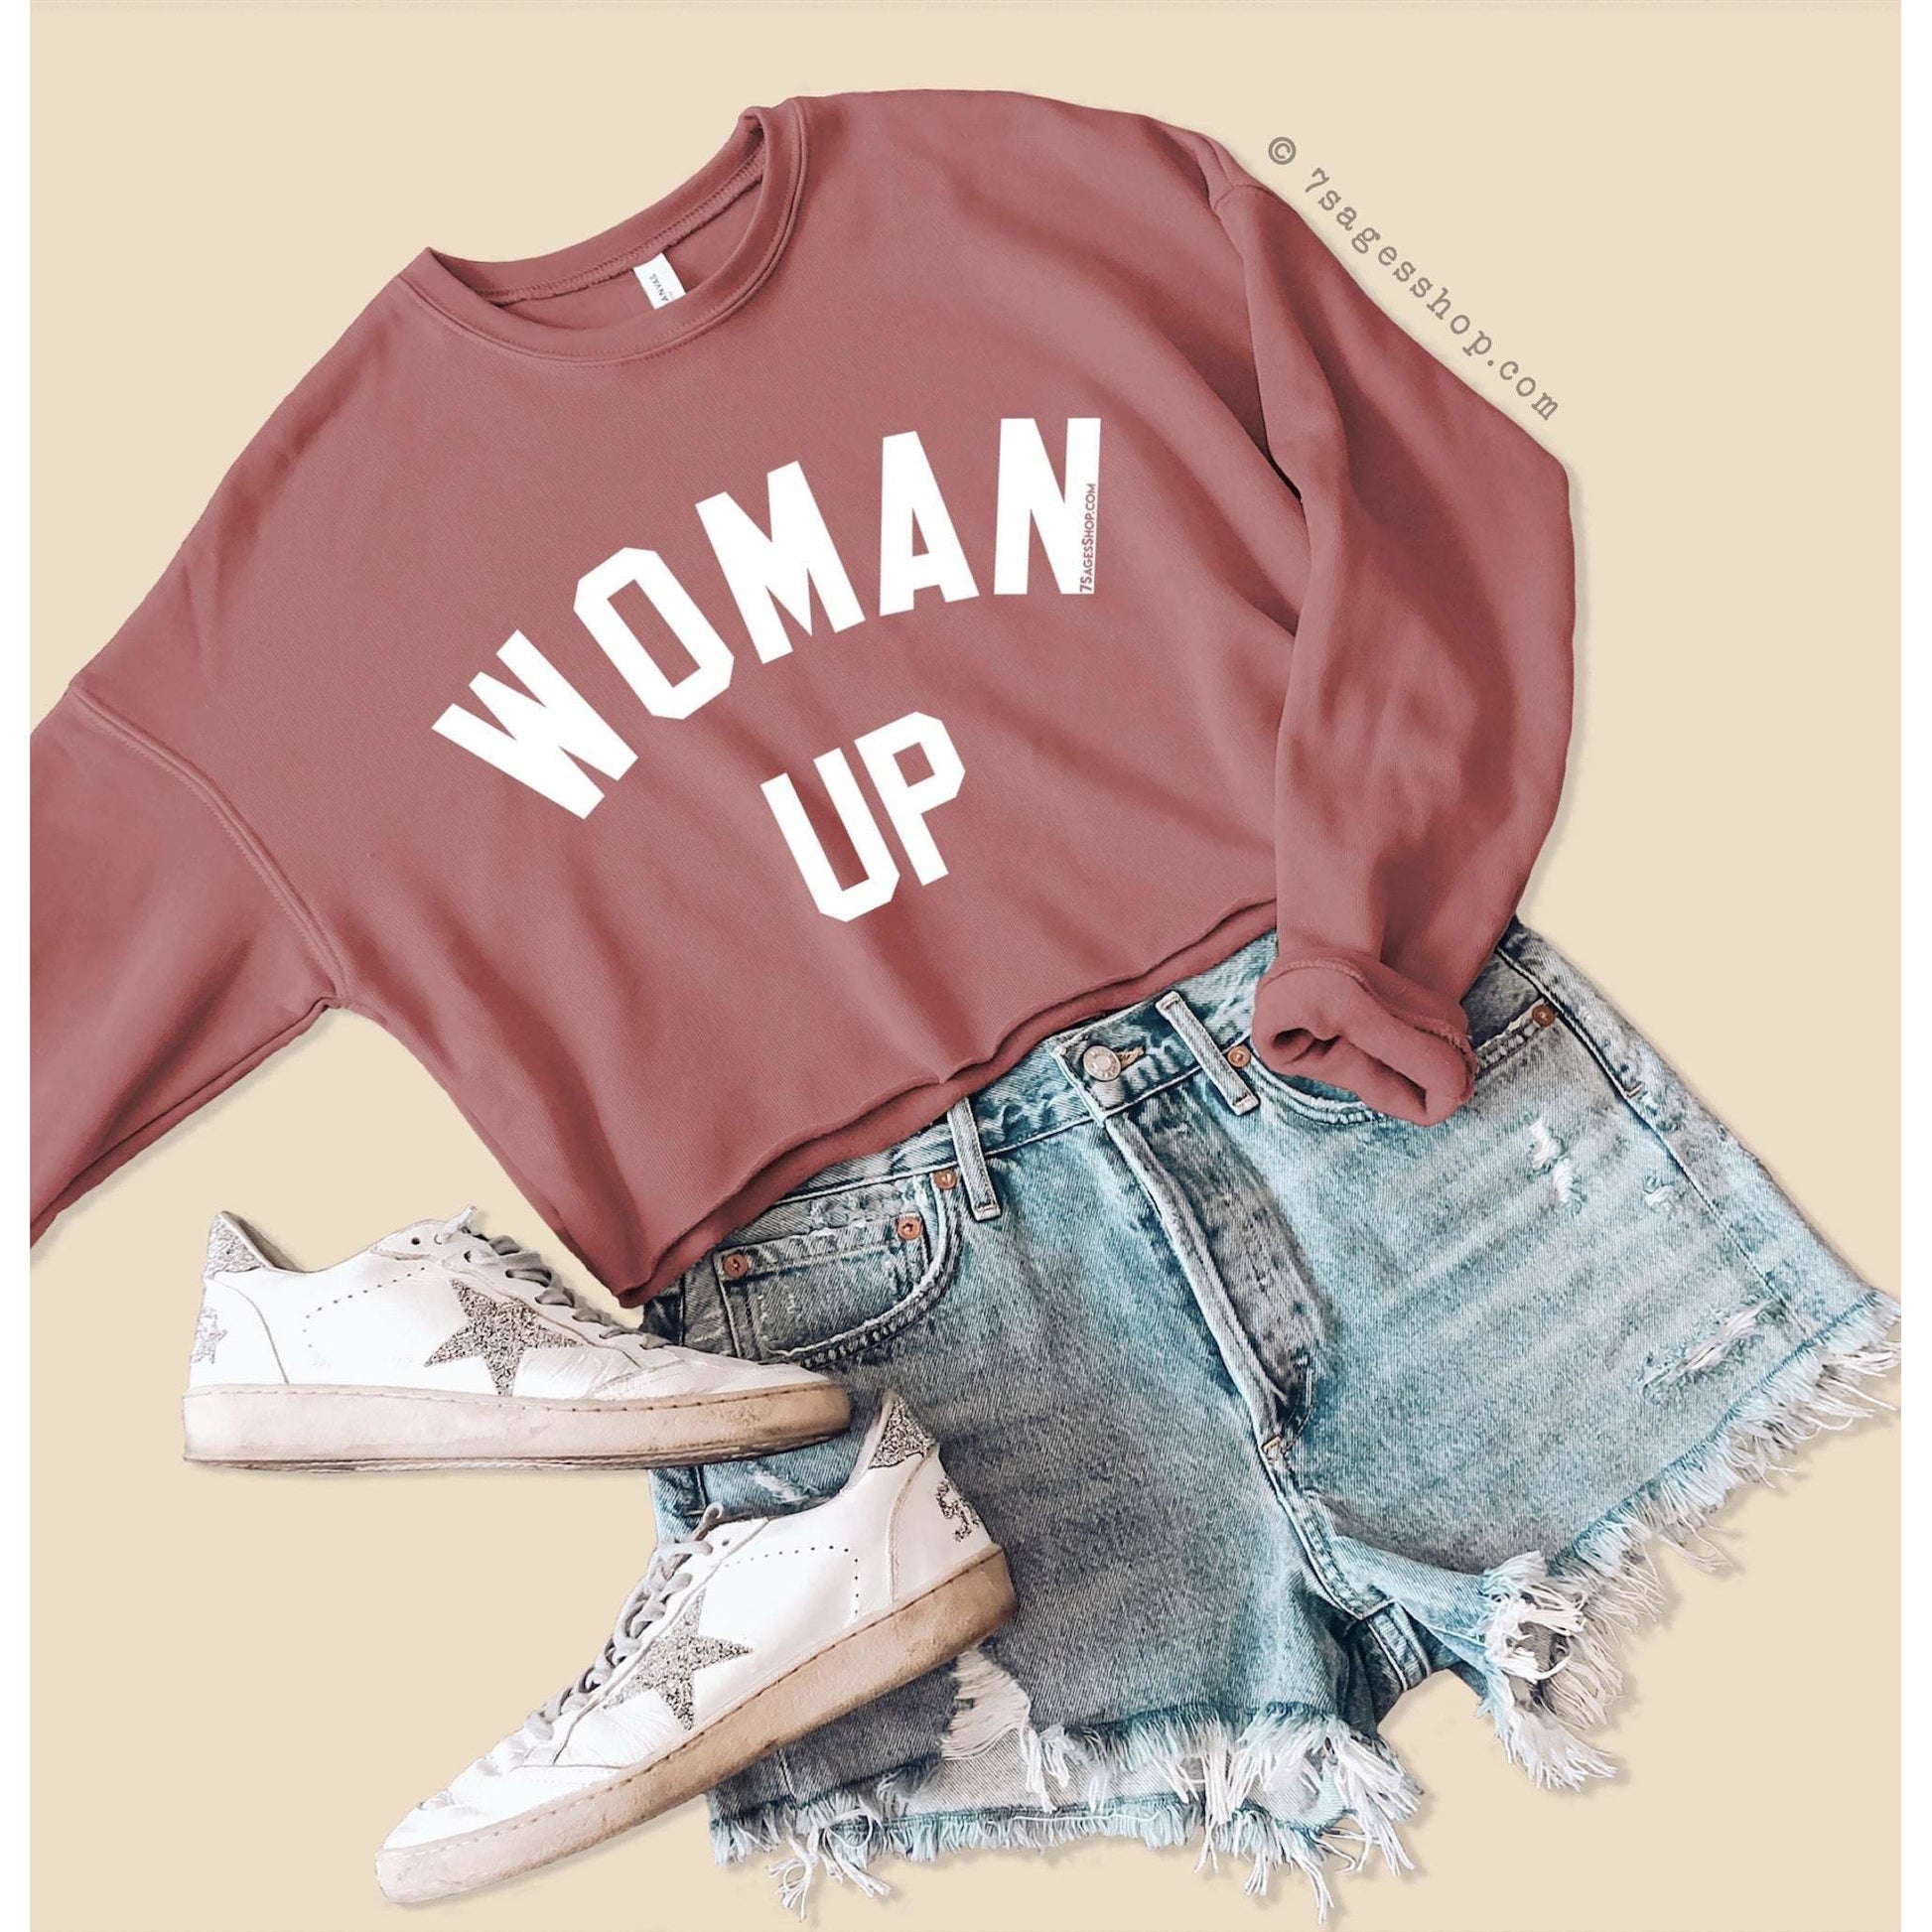 Woman Up Cropped Sweatshirt - Woman Up Sweatshirt - Feminist Shirts - Woman Up Crop Top - Fleece Sweatshirt